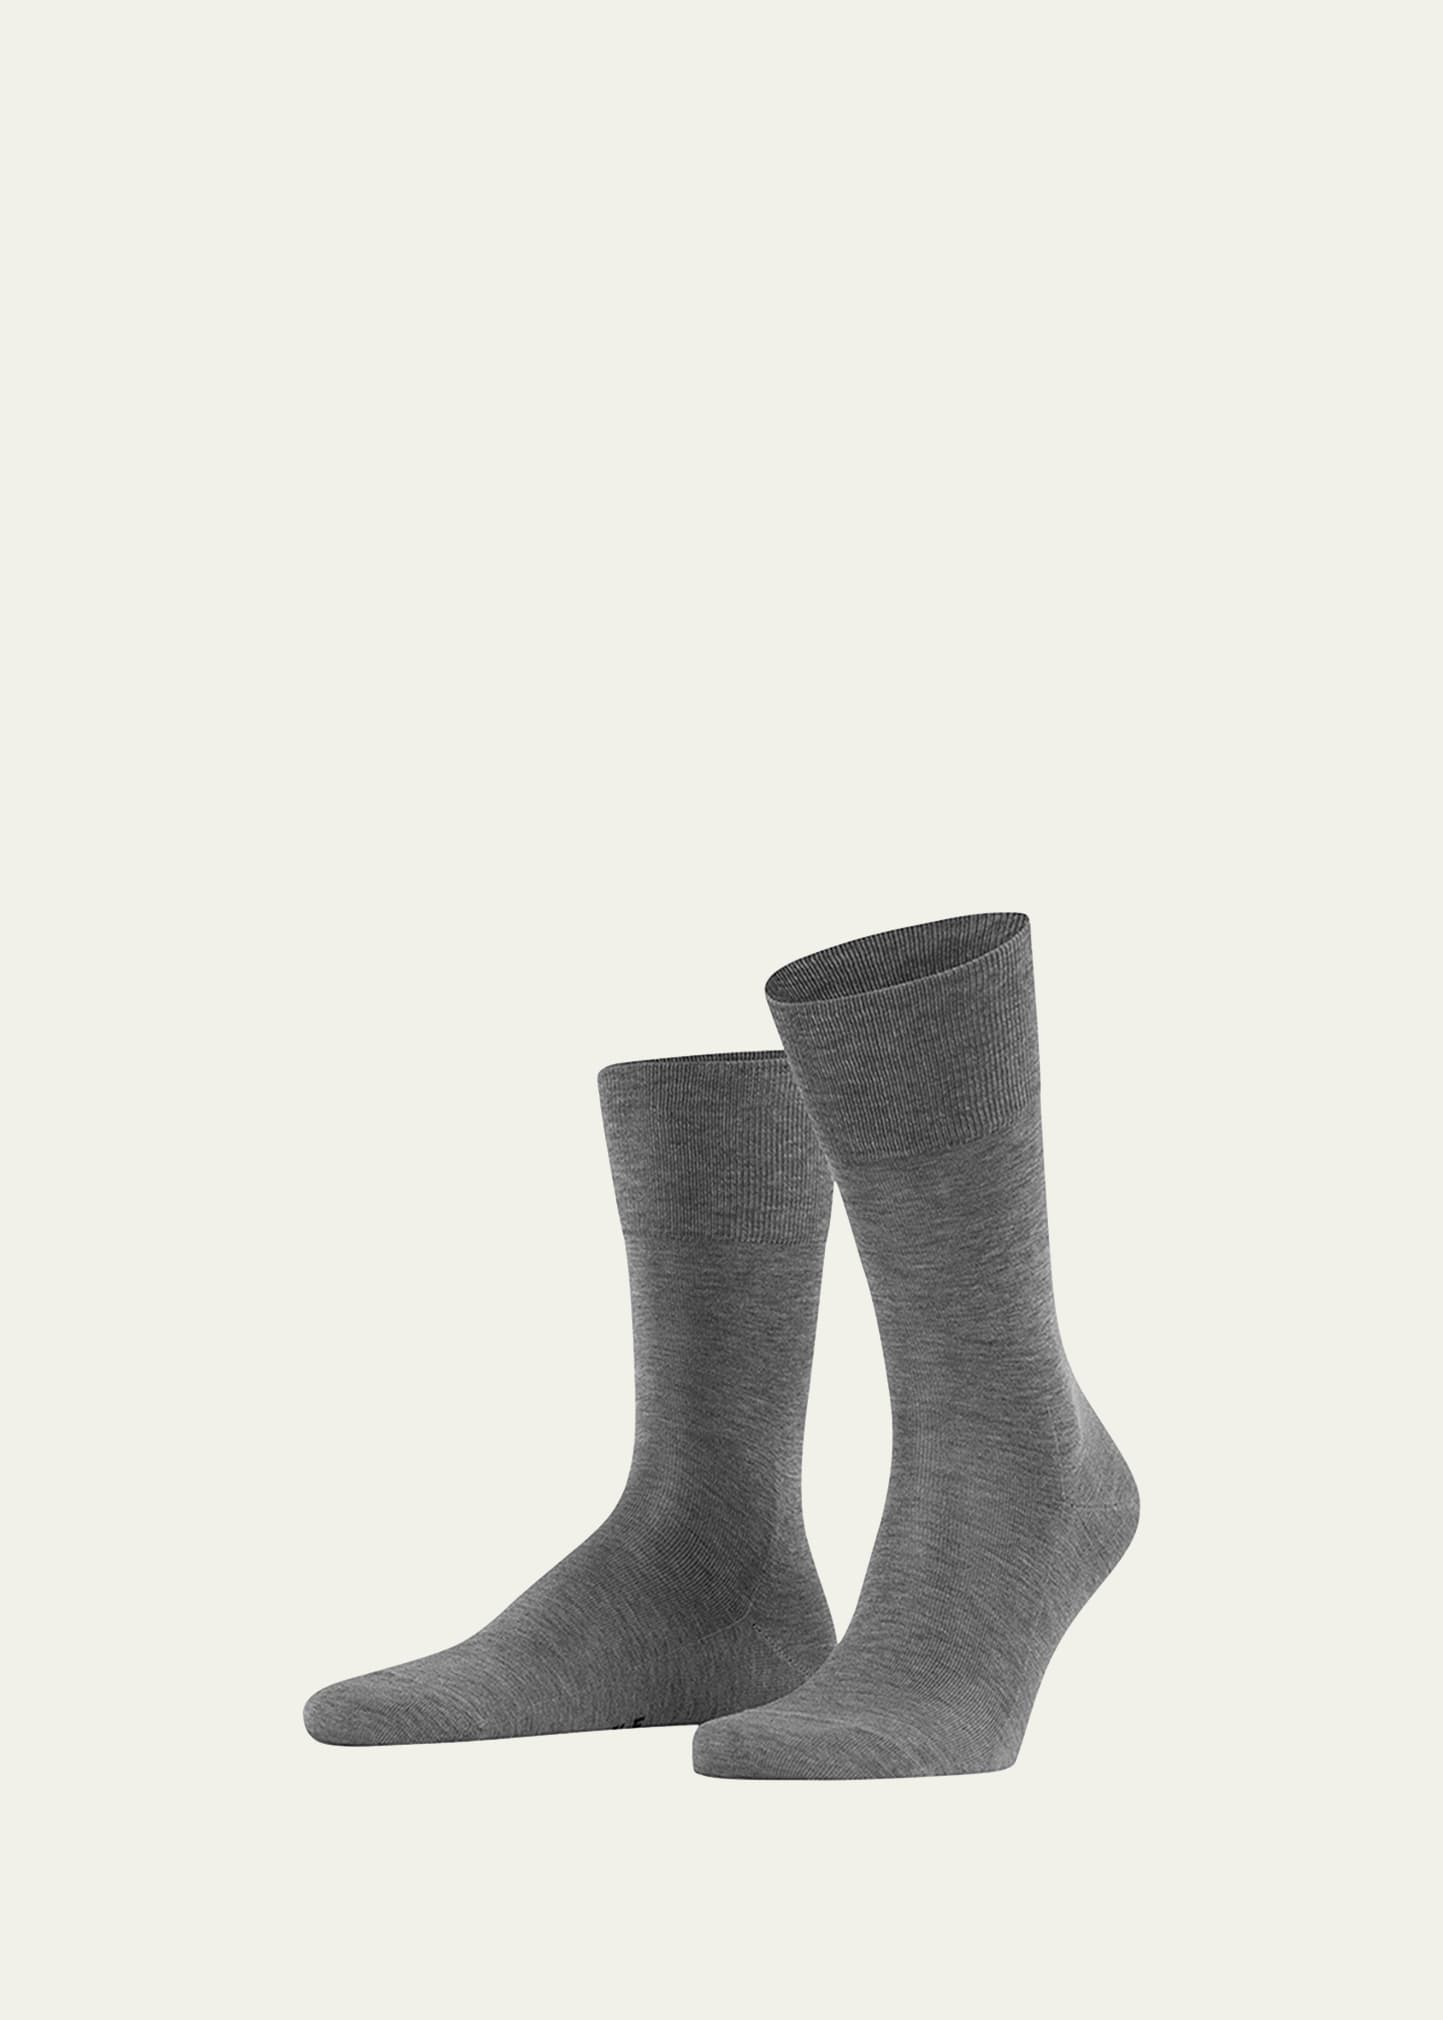 Falke Men's Tiago Knit Mid-calf Socks In Dark Navy